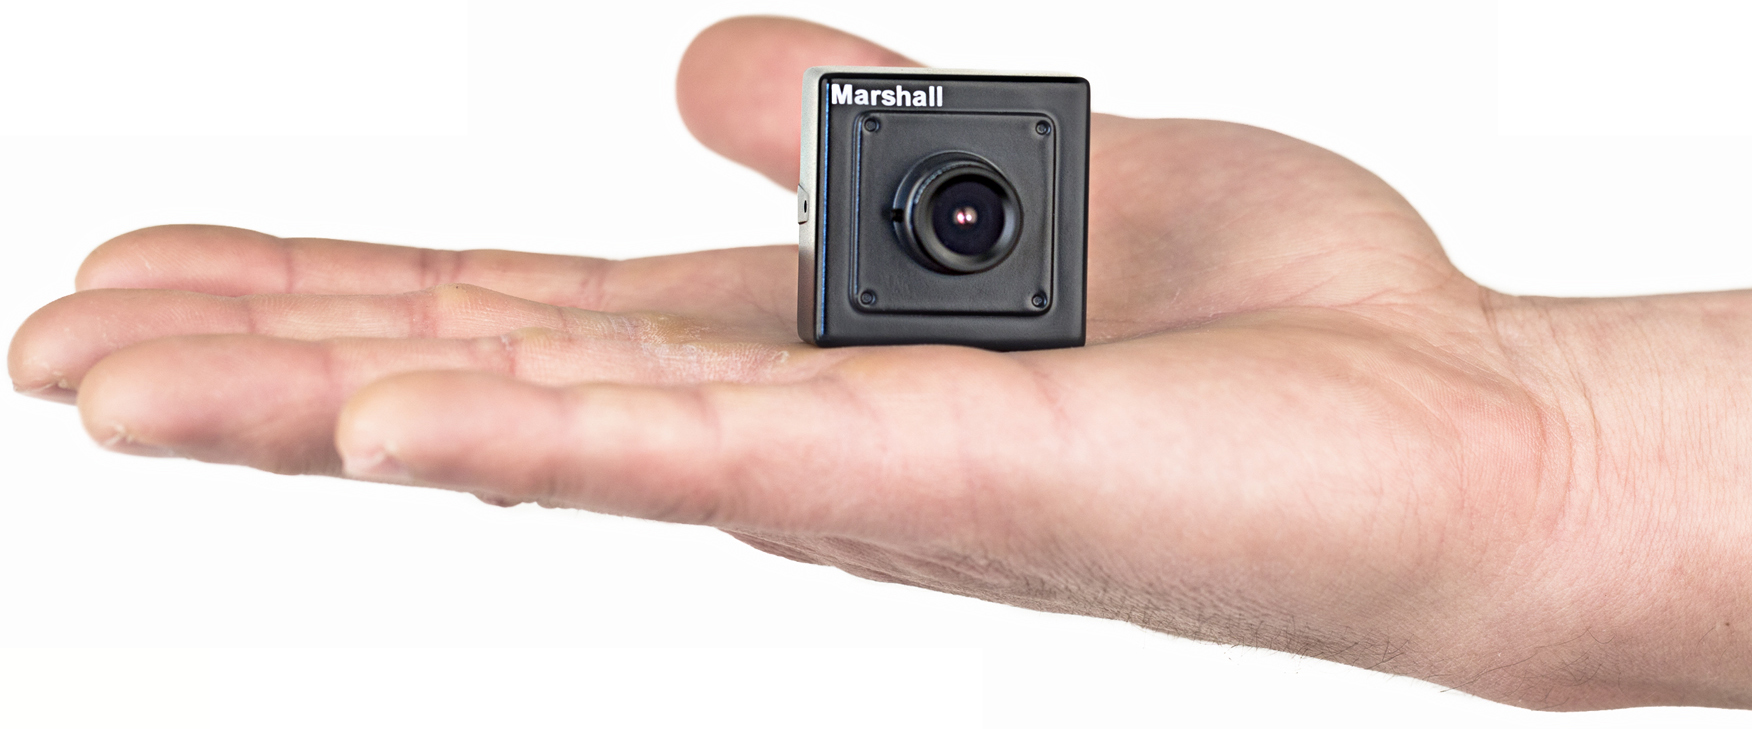 Marshall Develops Low Cost “Palm Size” Broadcast HDSDI Camera 39